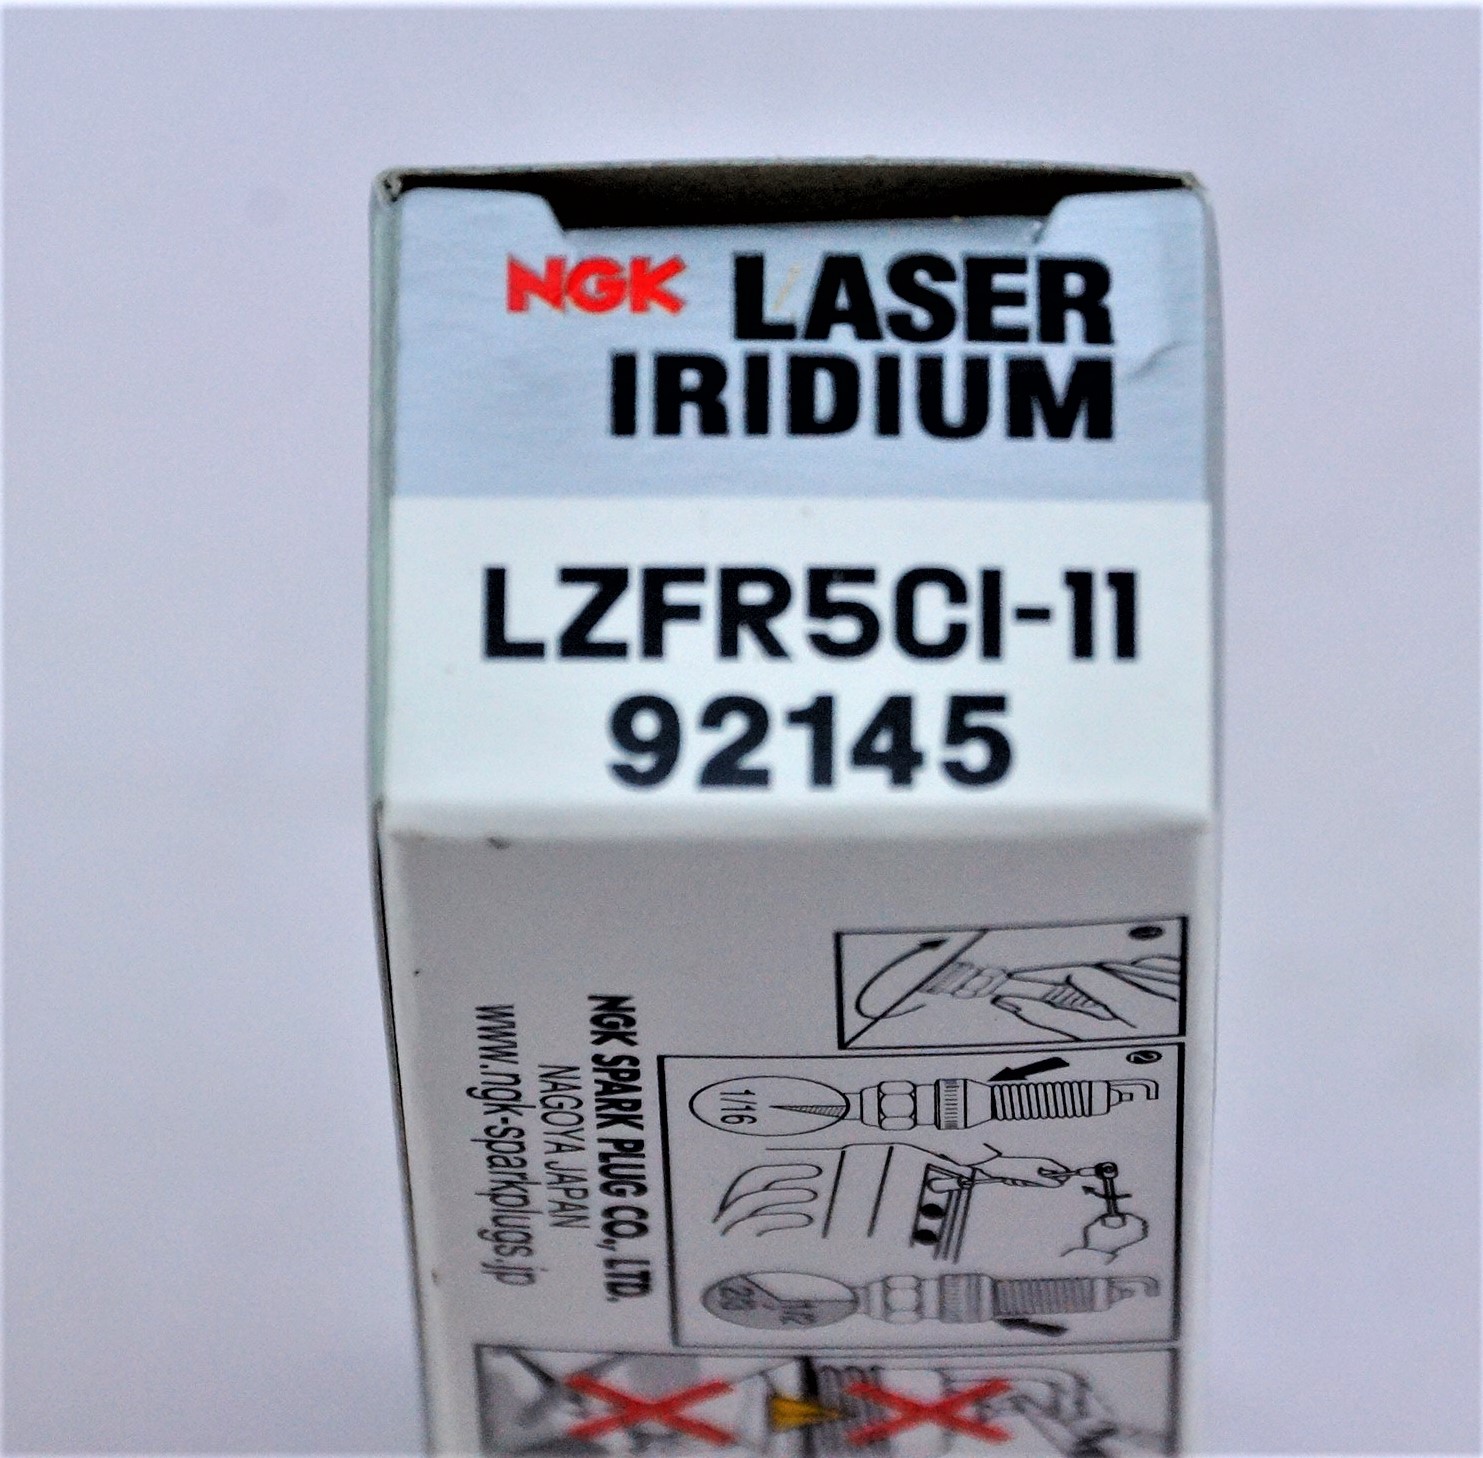 Pack of 8 - New Genuine NGK 92145 Laser Iridium Spark Plug Fast Free Shipping - image 2